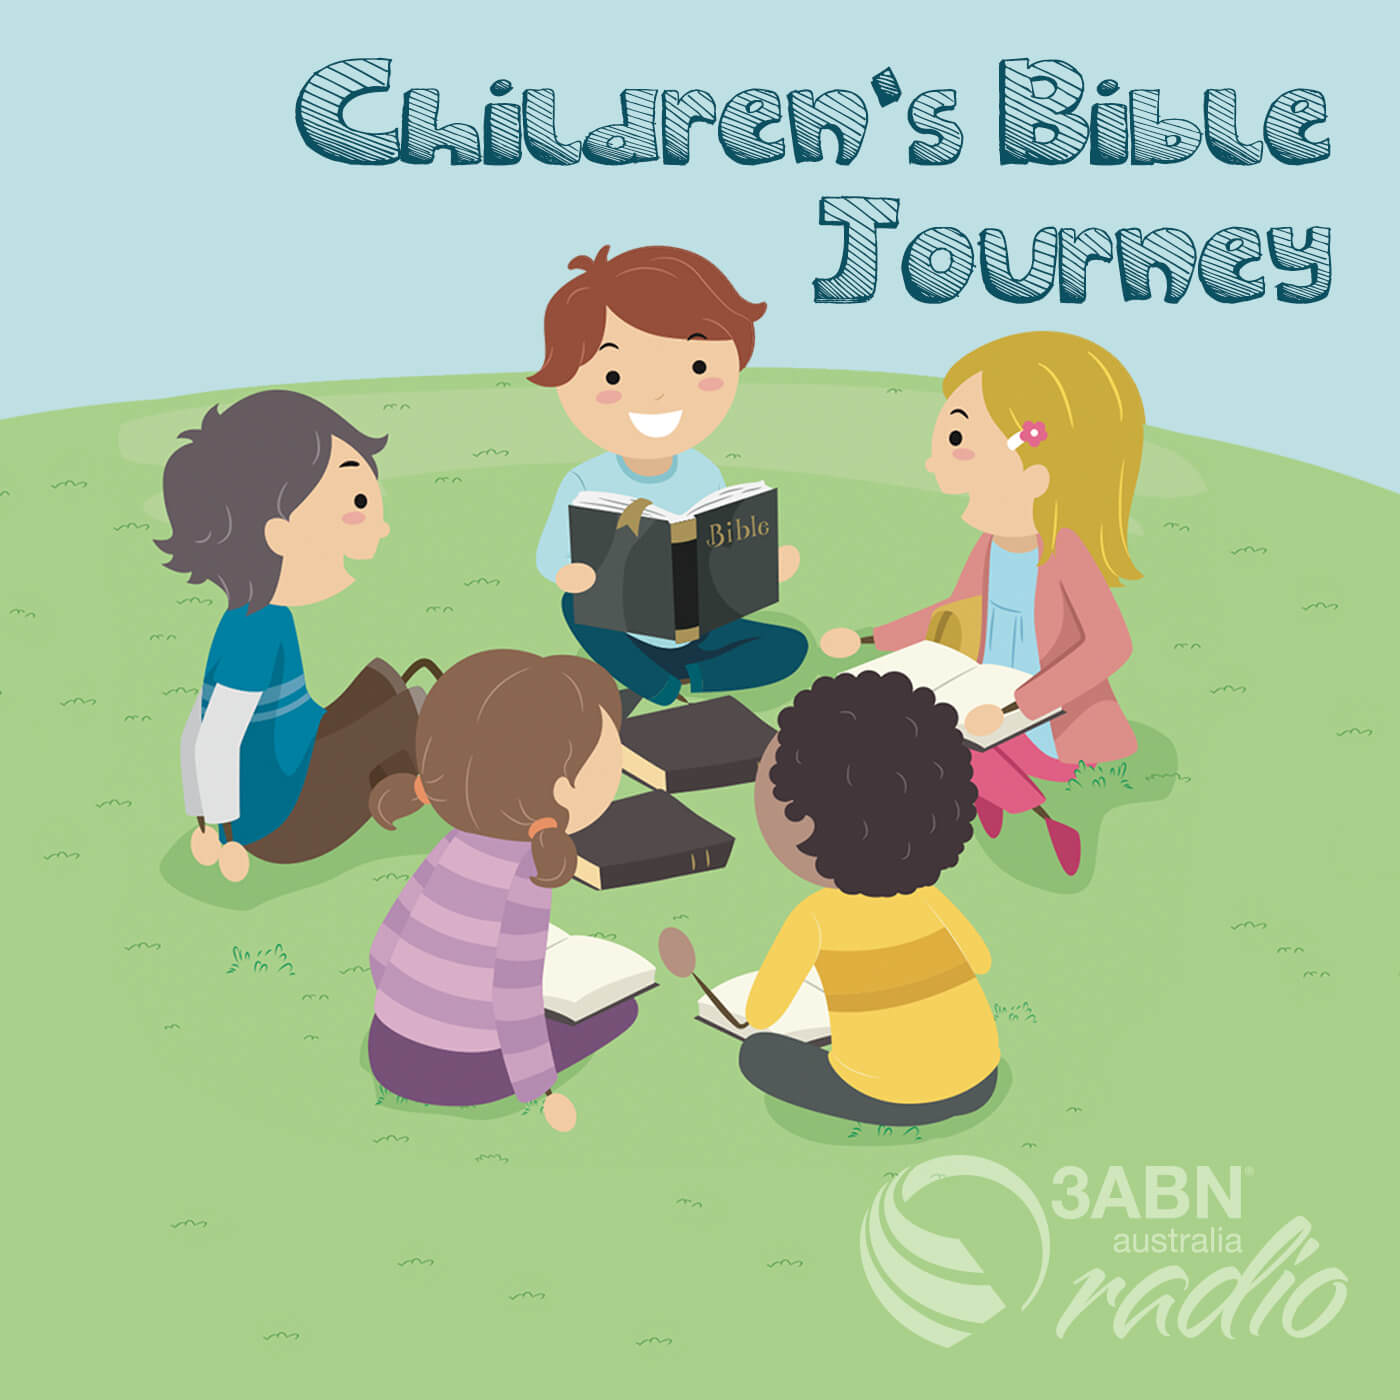 Children's Bible Journey - 2147